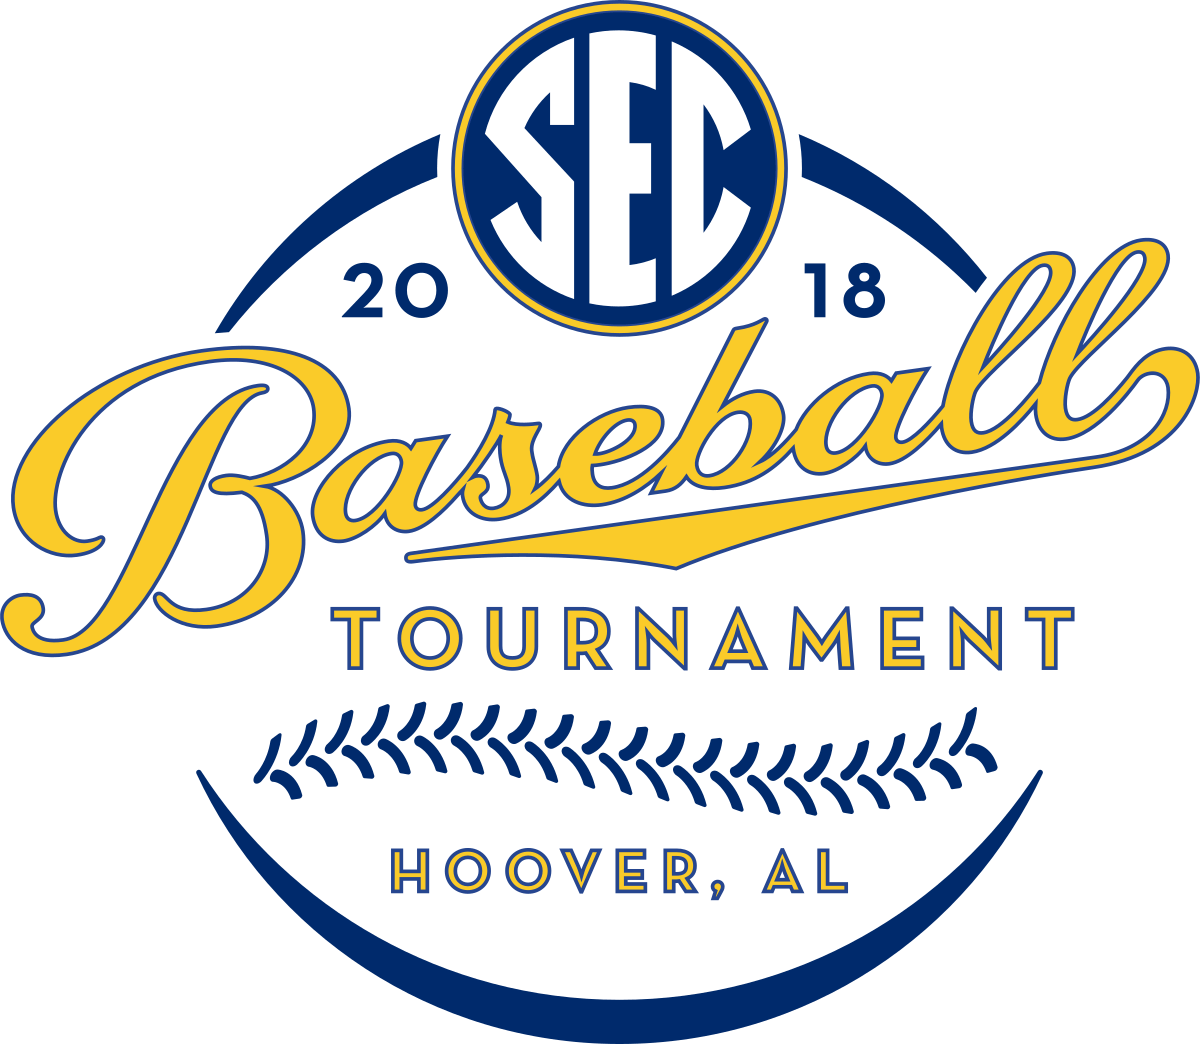 Tournament of Champions Logo - Southeastern Conference Baseball Tournament